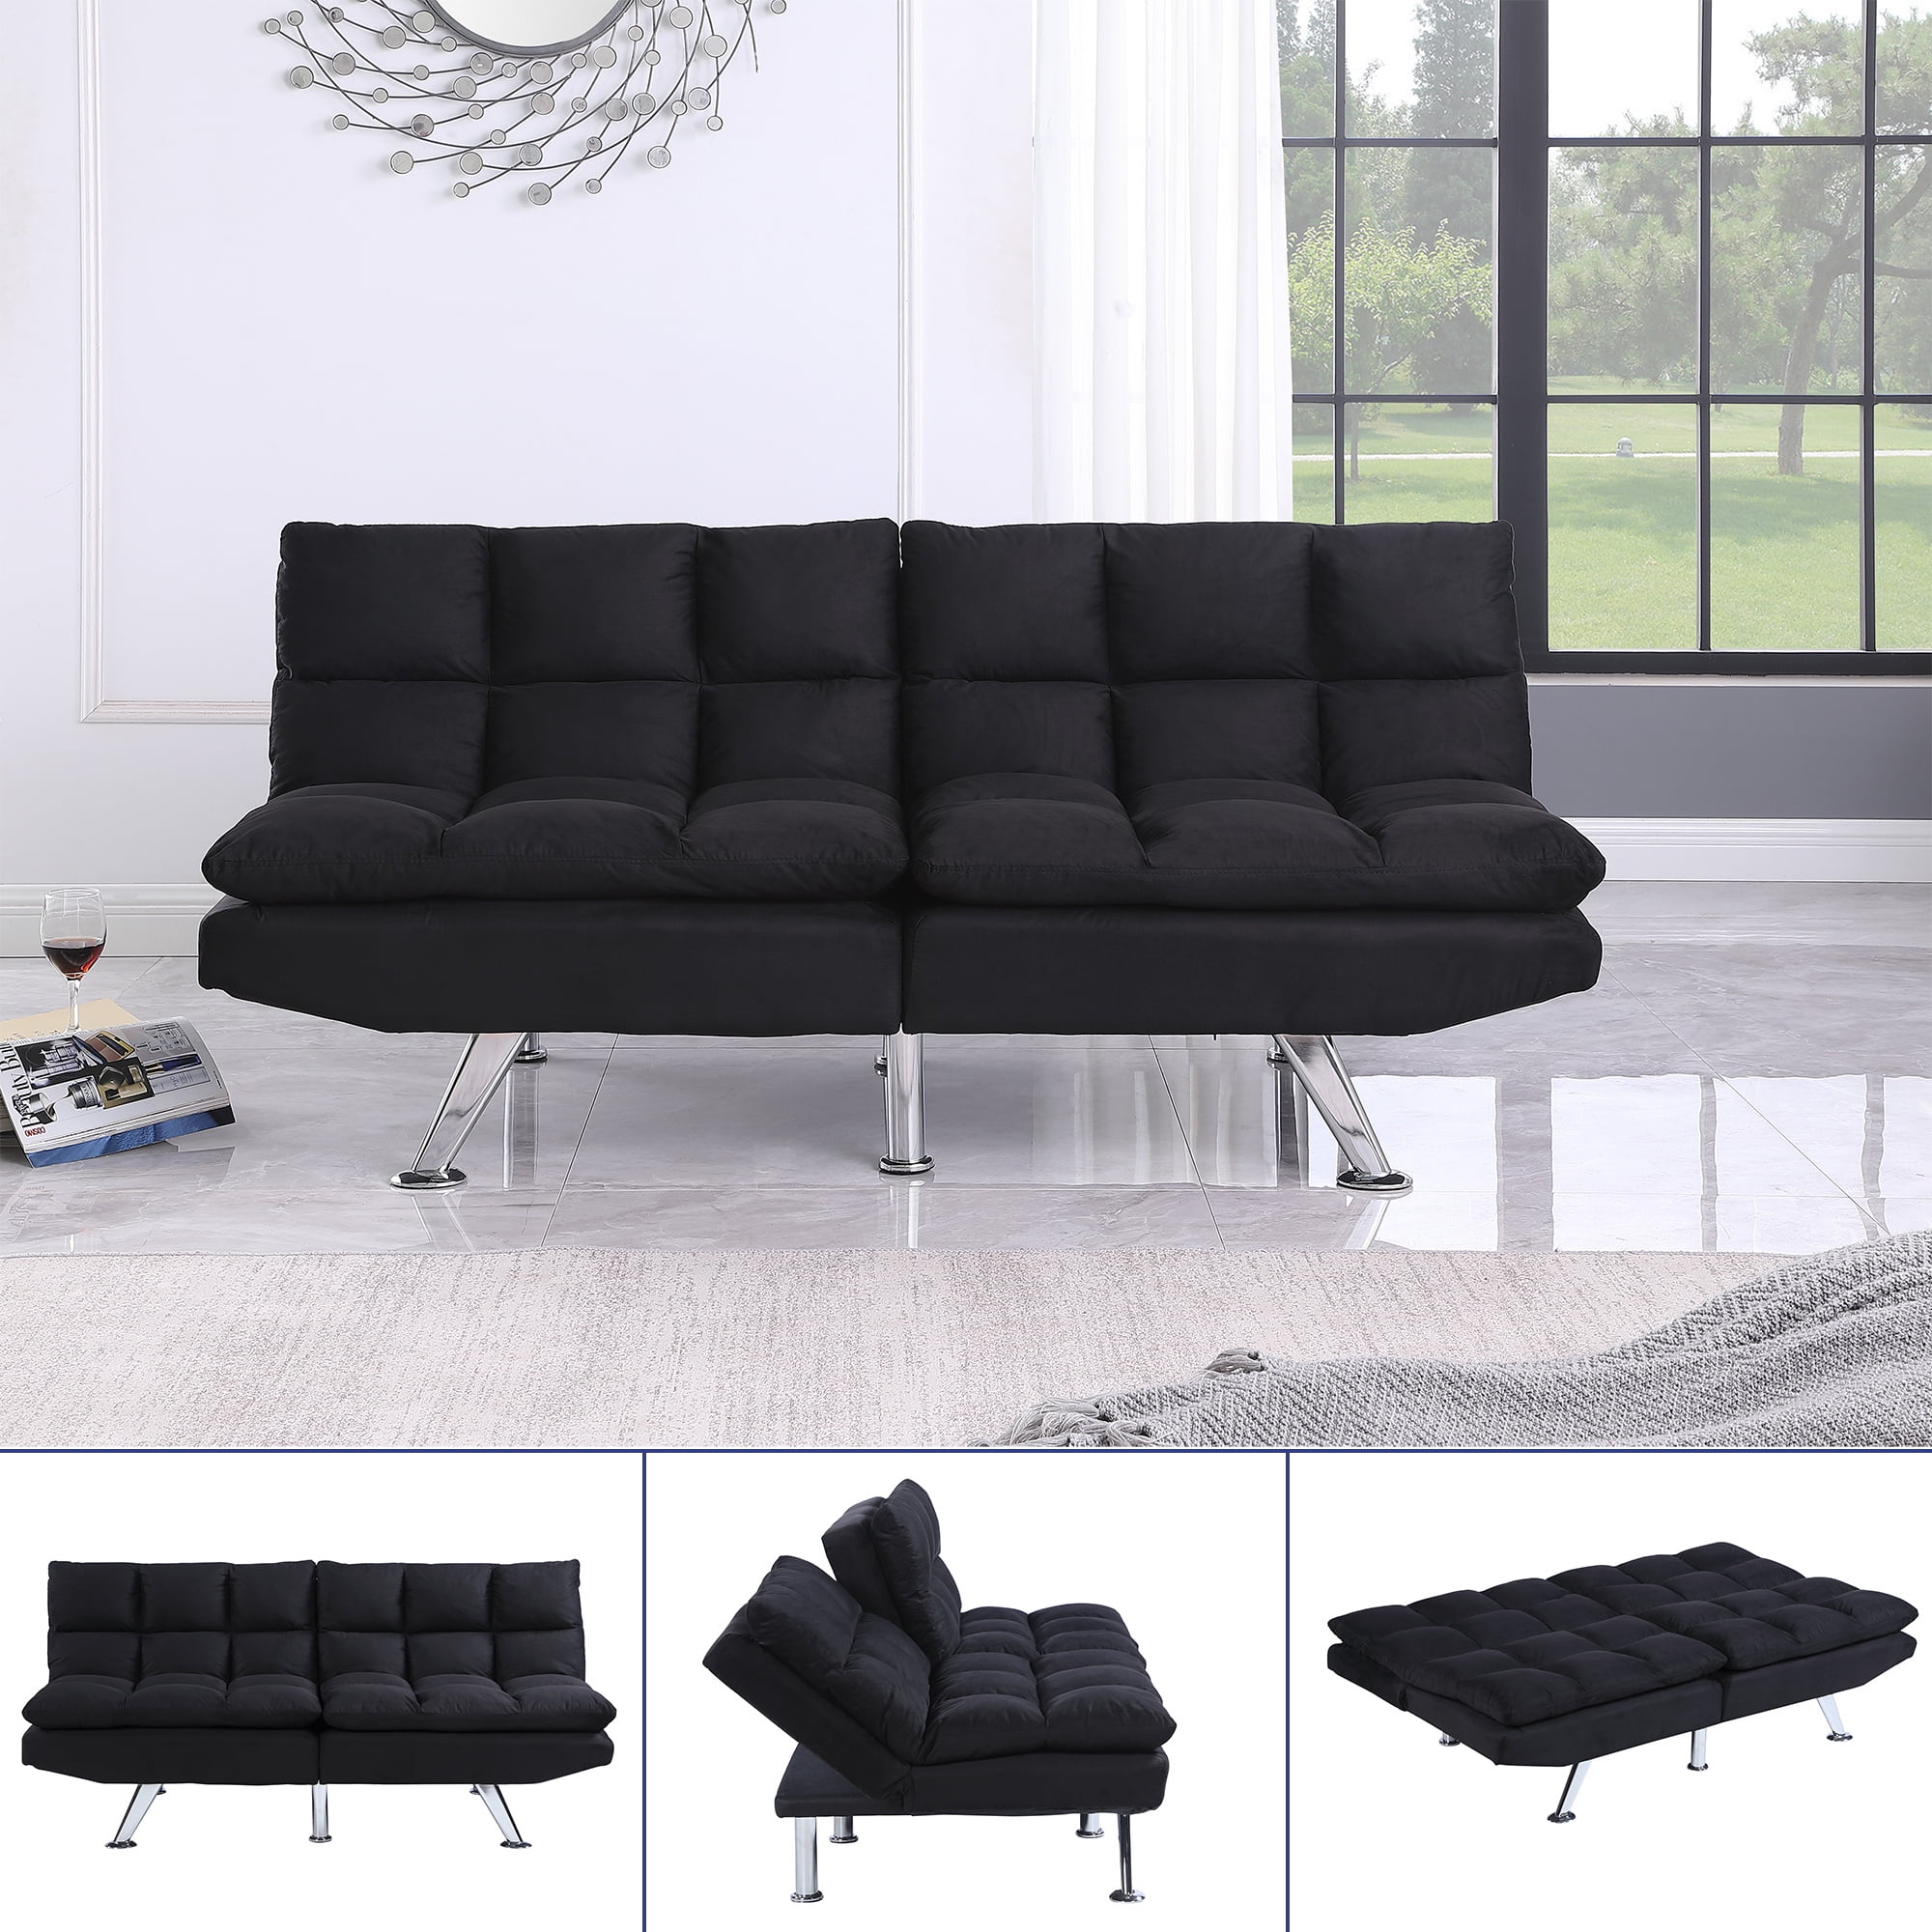 Futon Sofa Bed with MATTRESS Modern Convertible Sleeper Lounger Dorm Couch Black 